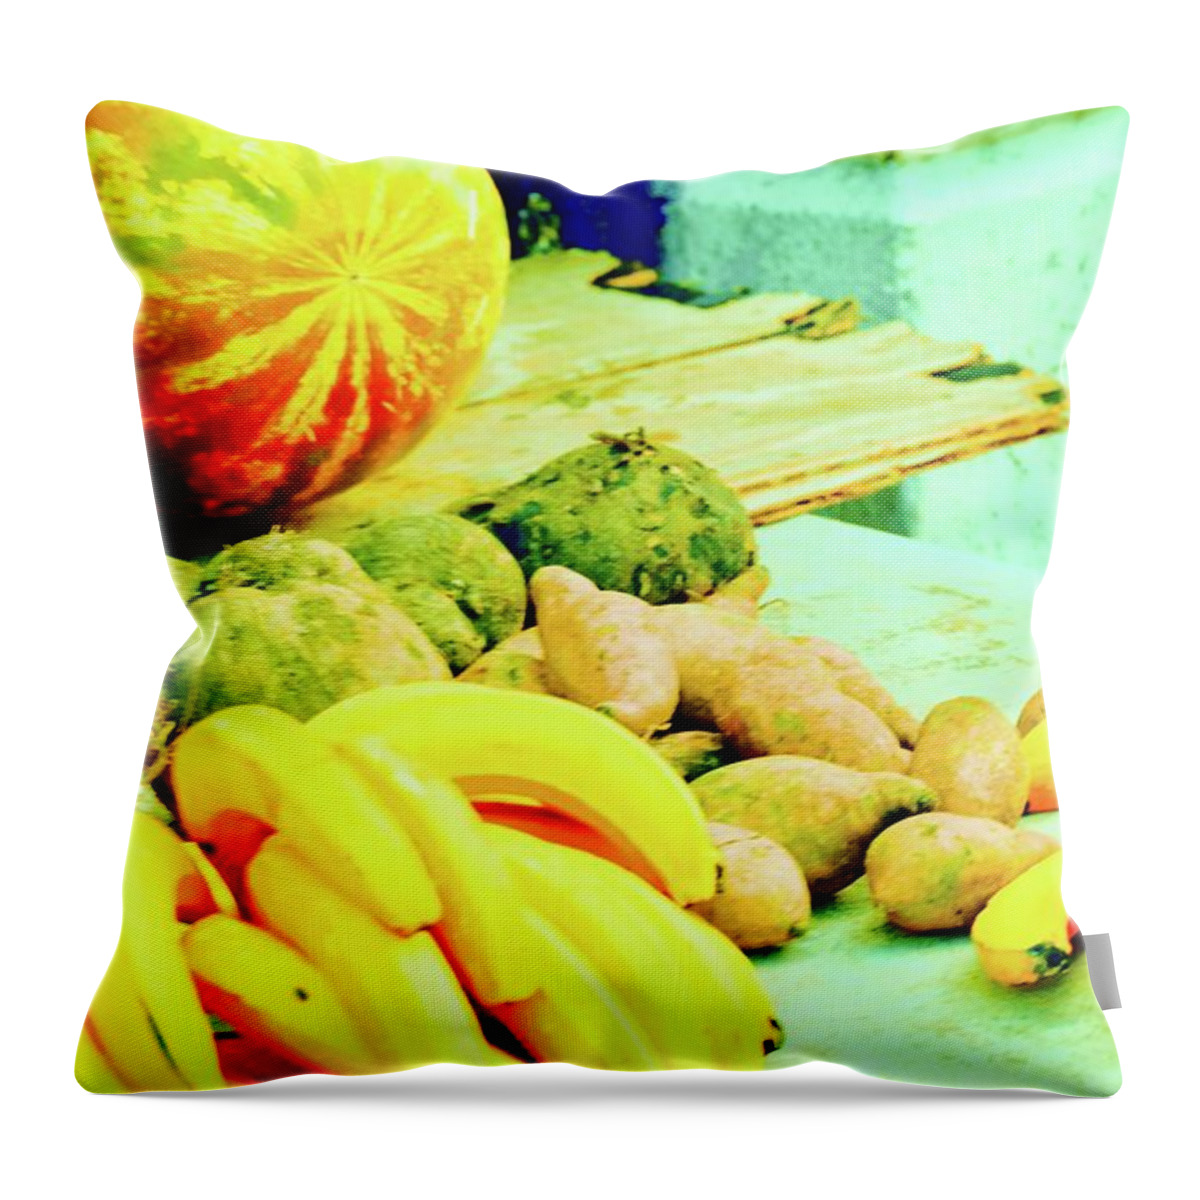 Fruit Throw Pillow featuring the photograph Frutas de Marcedo by Debra Grace Addison